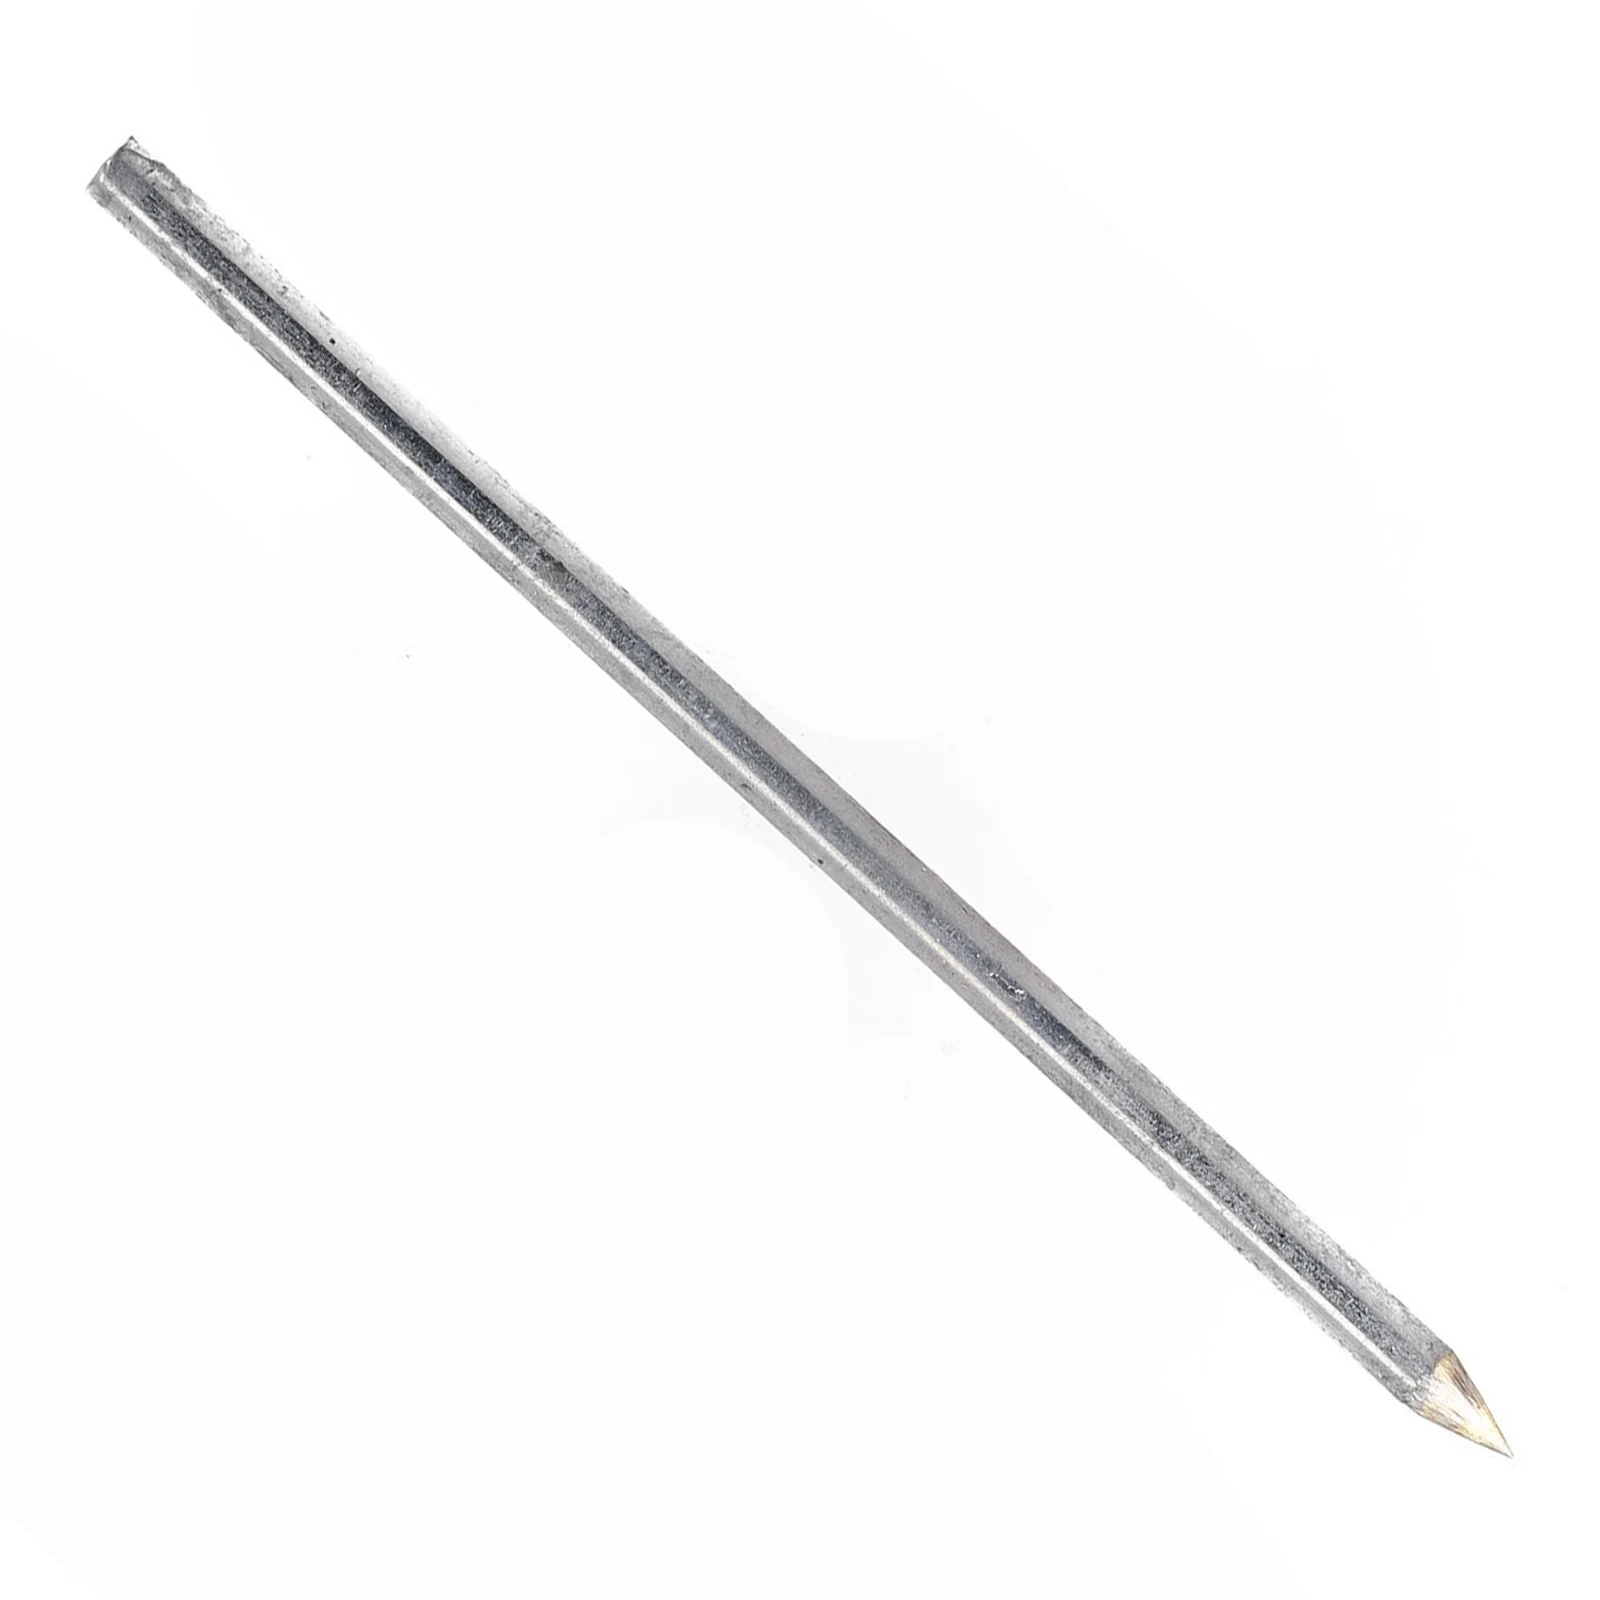 

1pcs Diamond Glass Tile Cutter Carbide Scriber Hard Metal Lettering Pen Construction Metalworking Woodworking Hand Tools 141mm